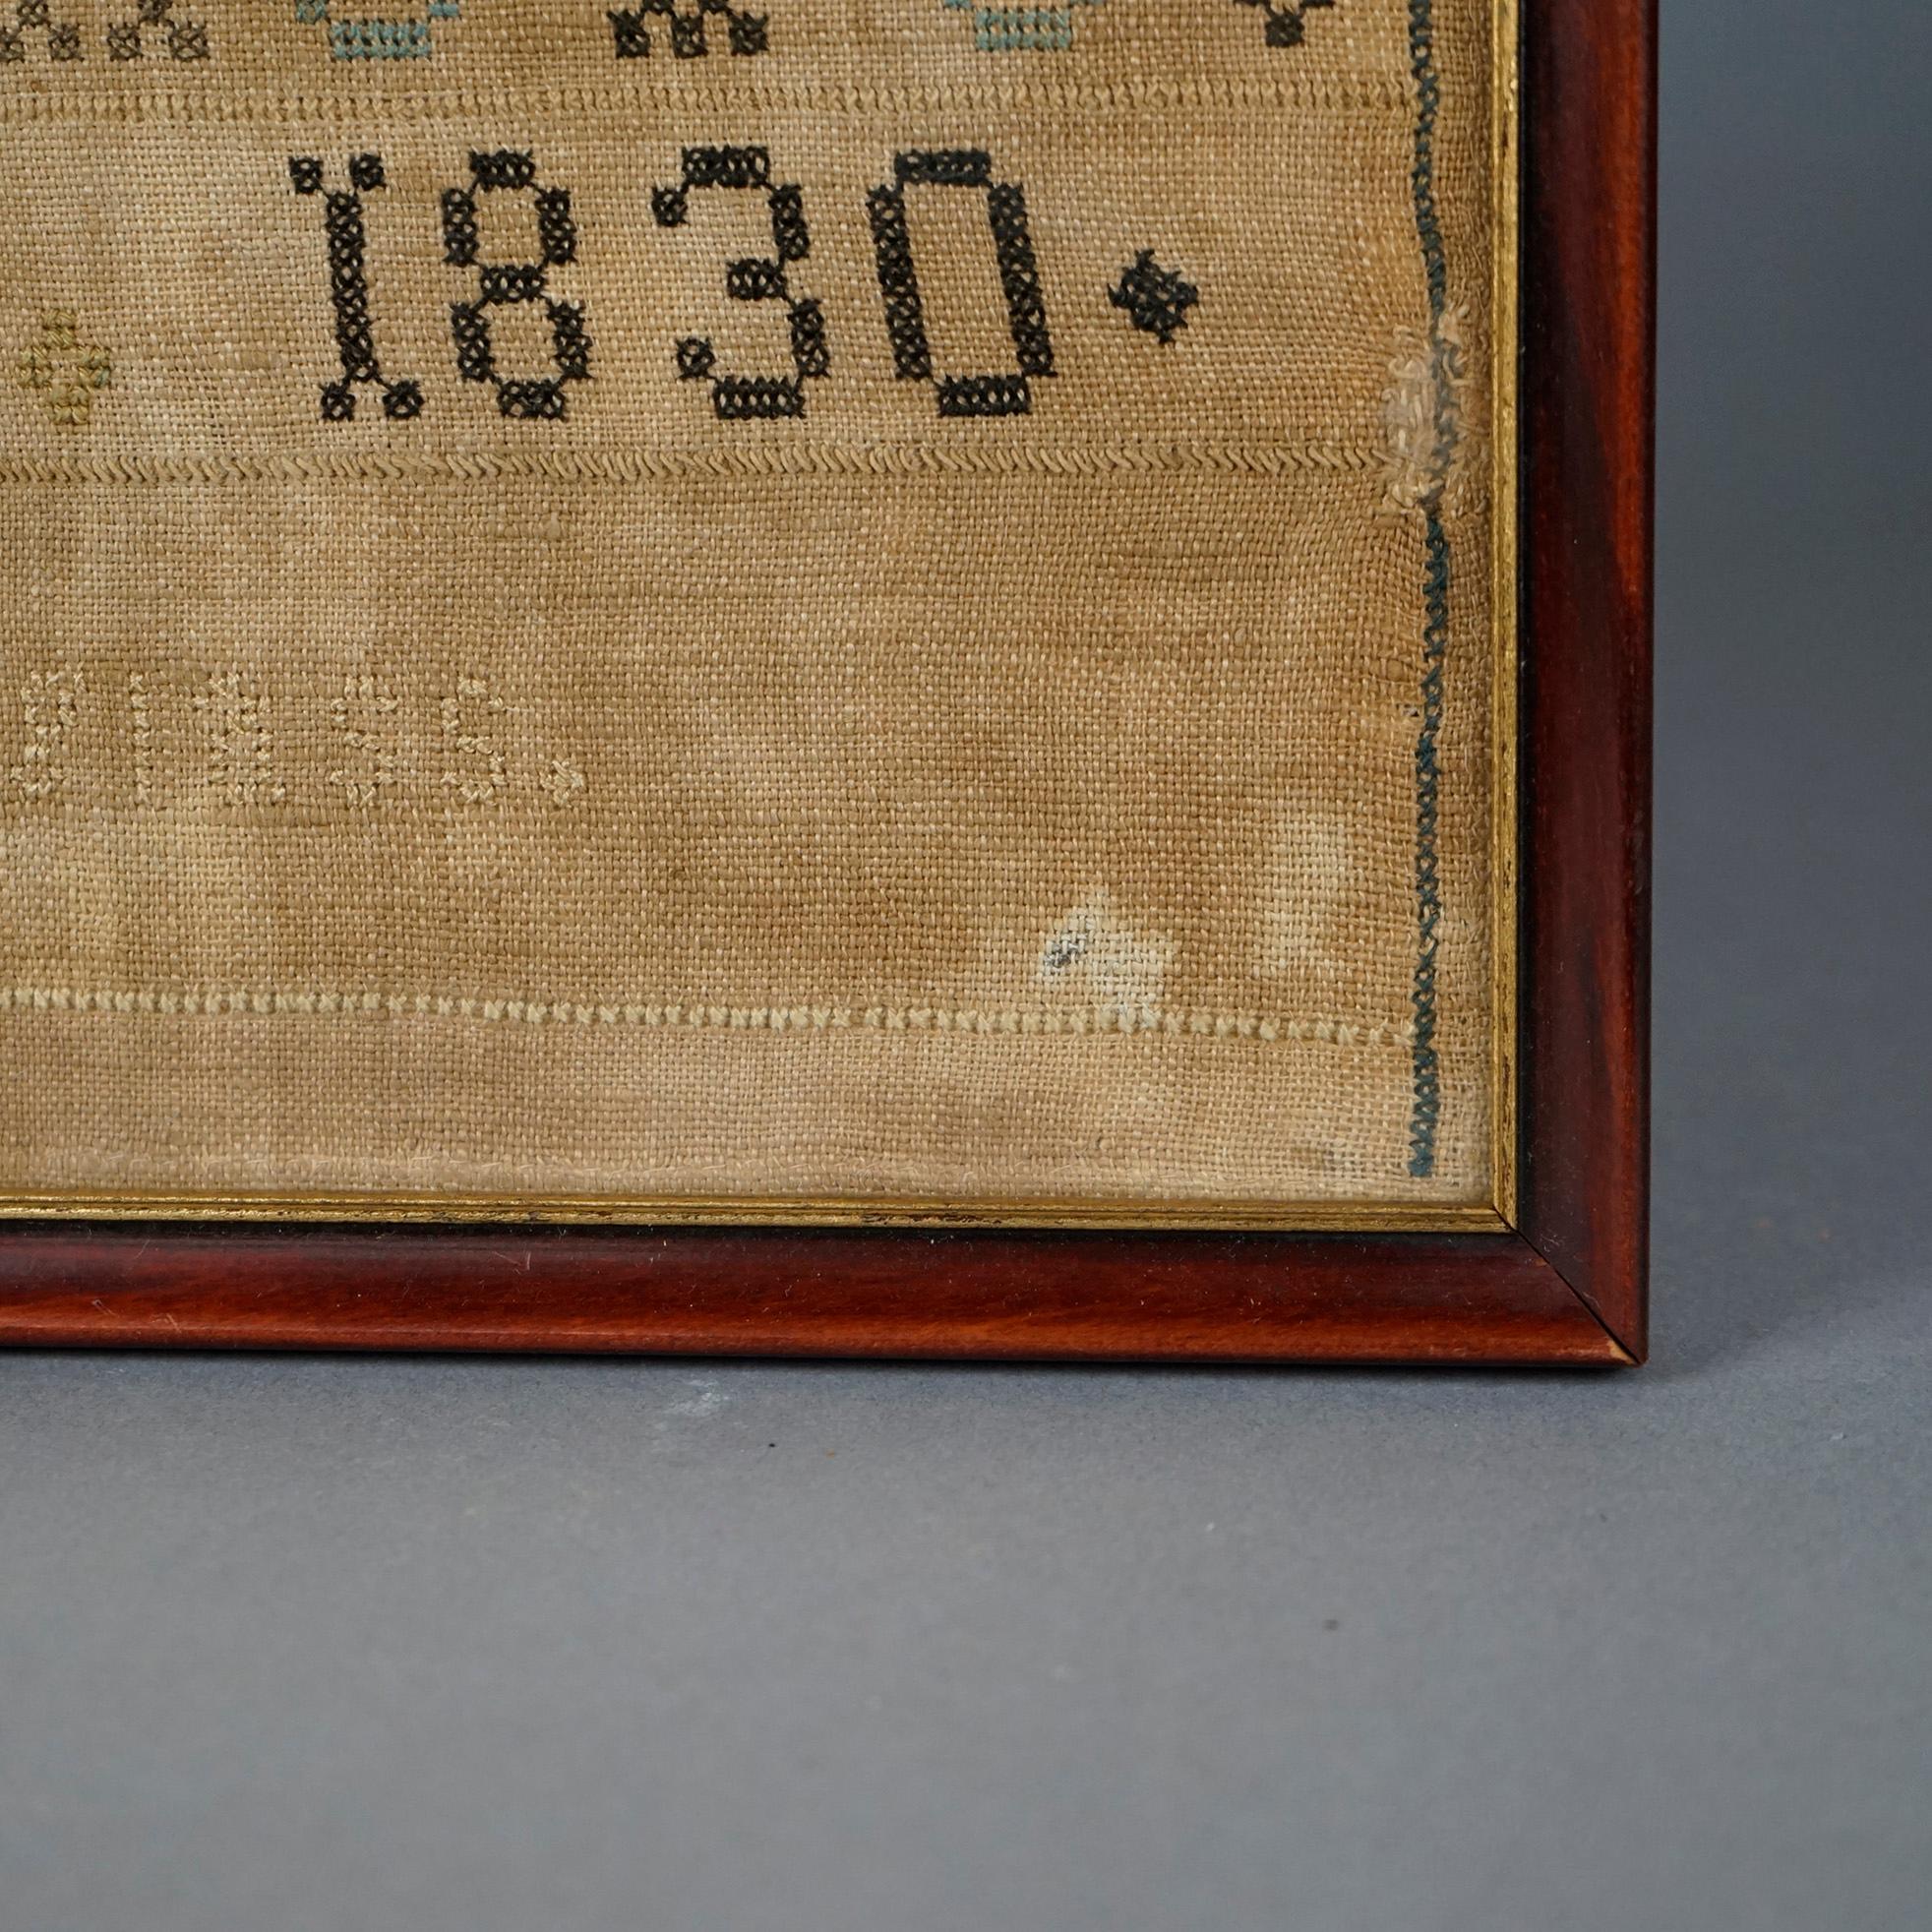 American Antique Framed Hand Crafted Needlework ABC Alphabet Sampler Dated 1830